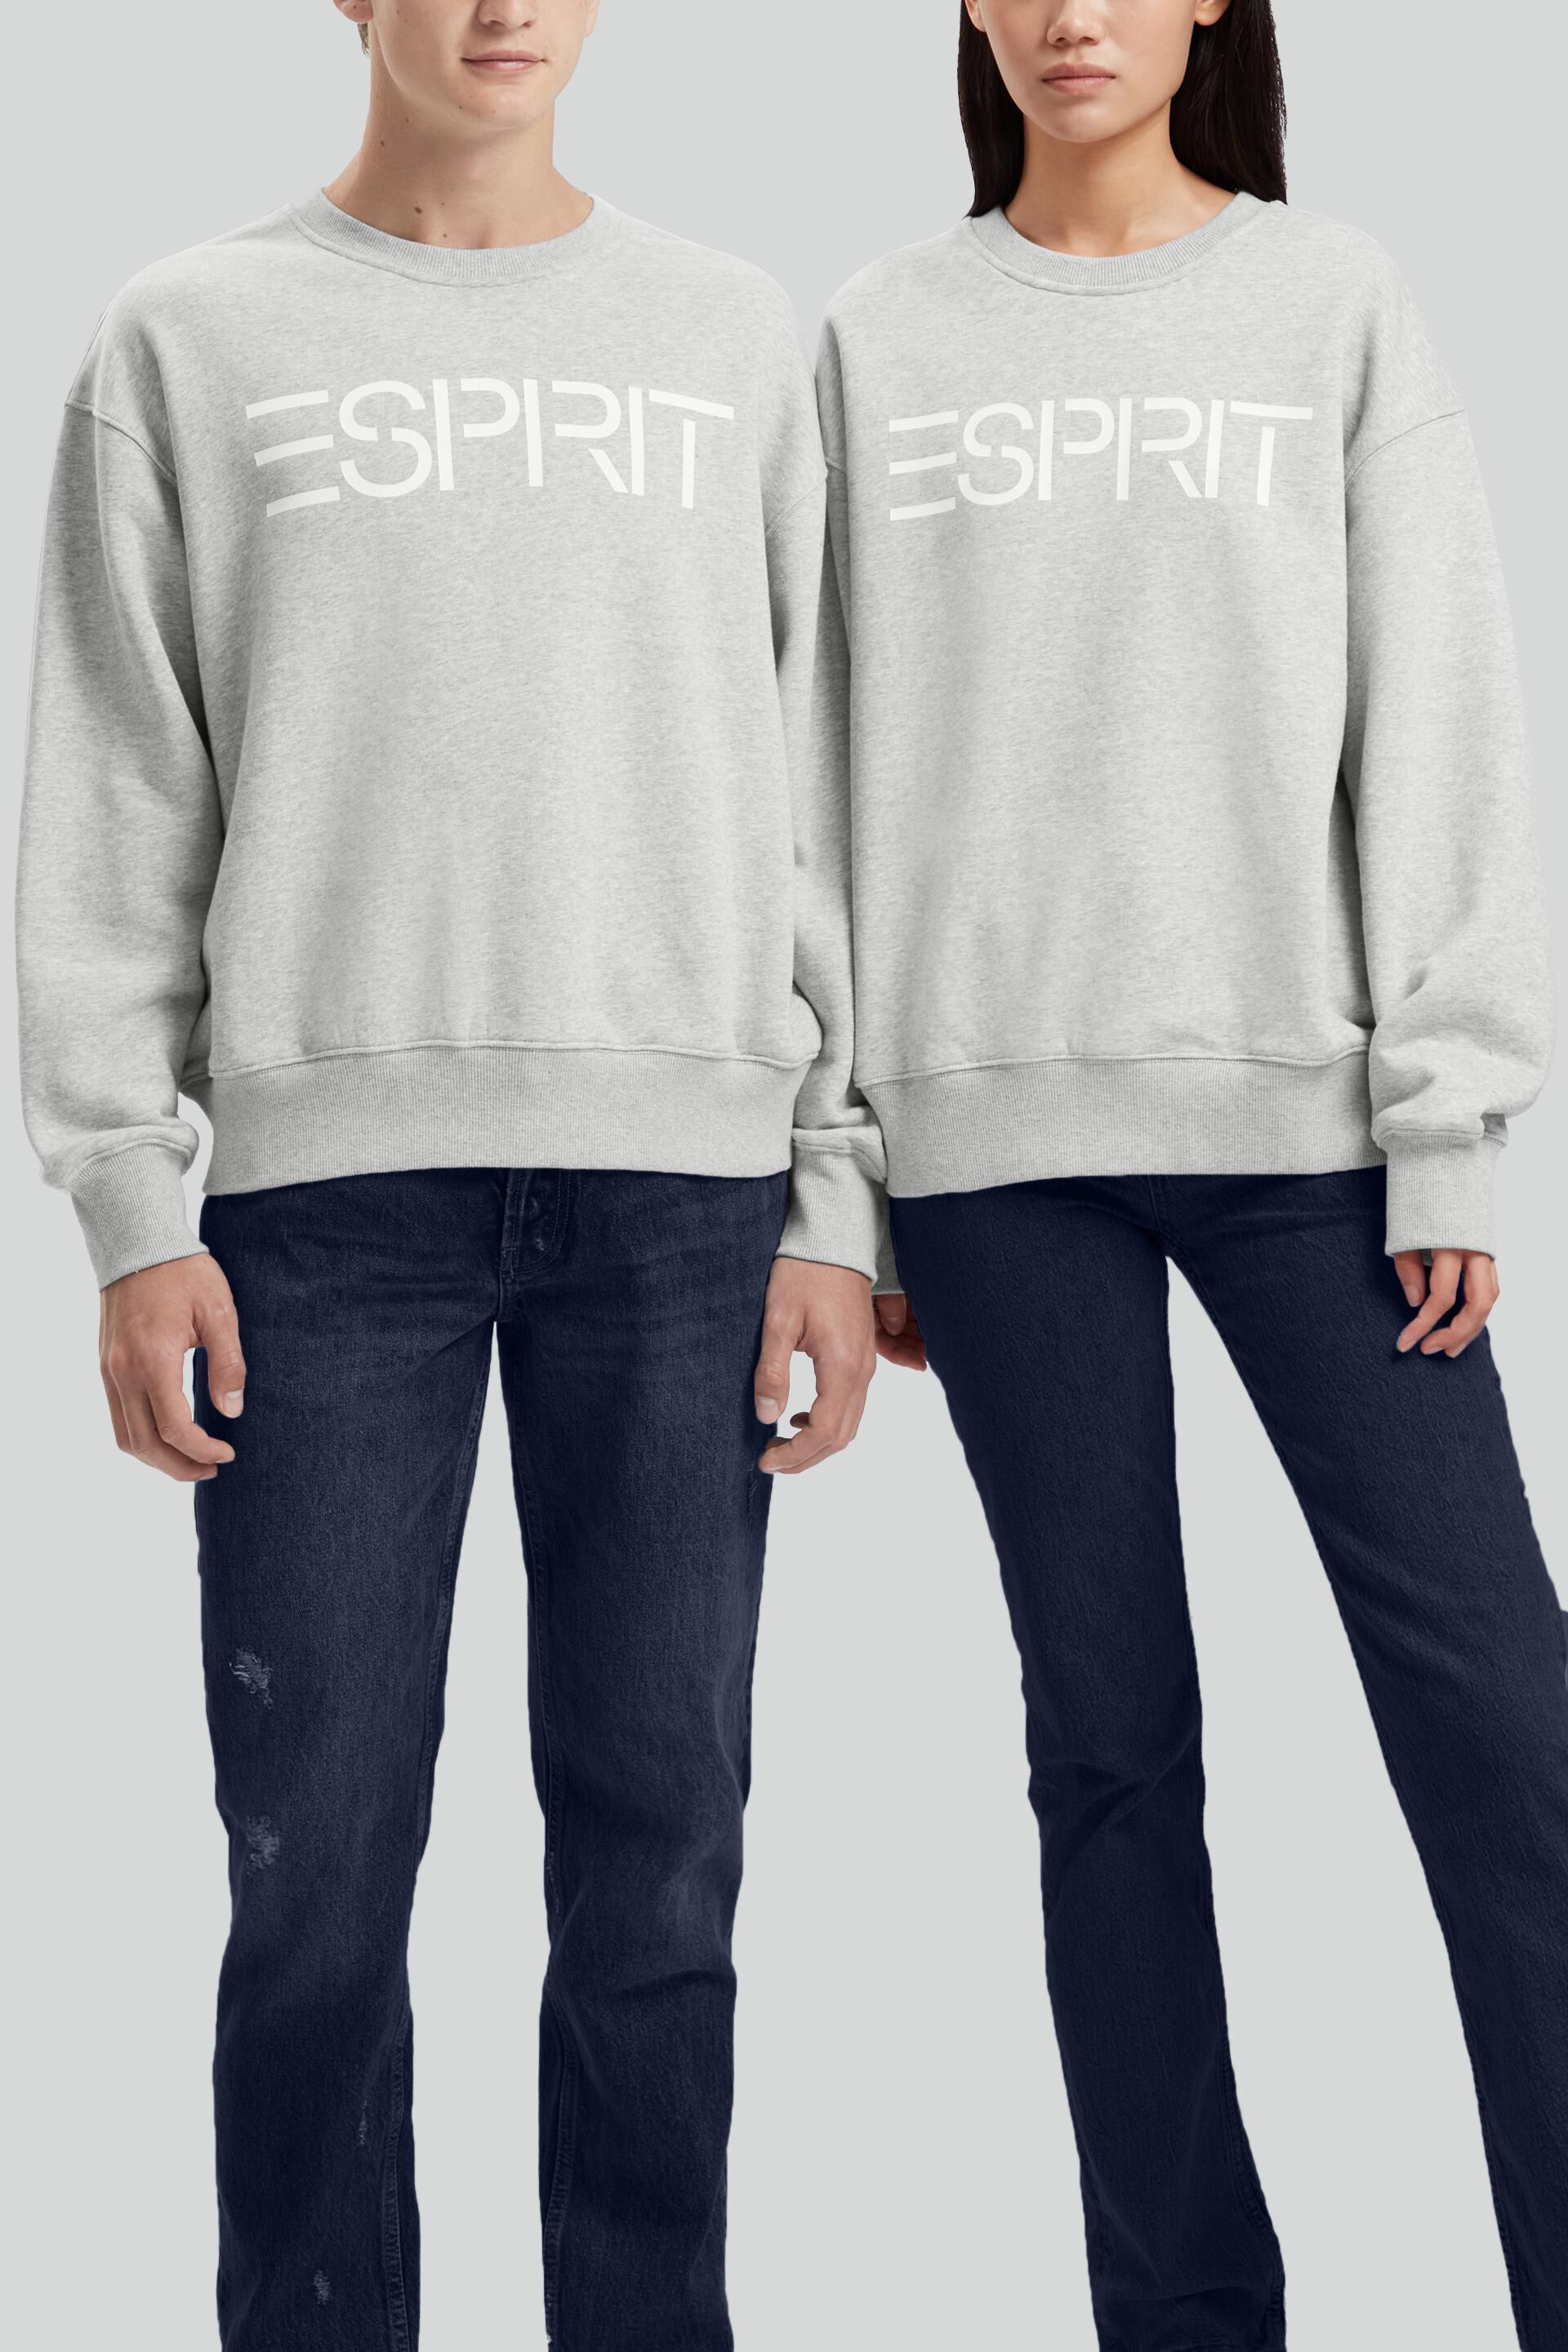 Esprit logo print Unisex sweatshirt with a